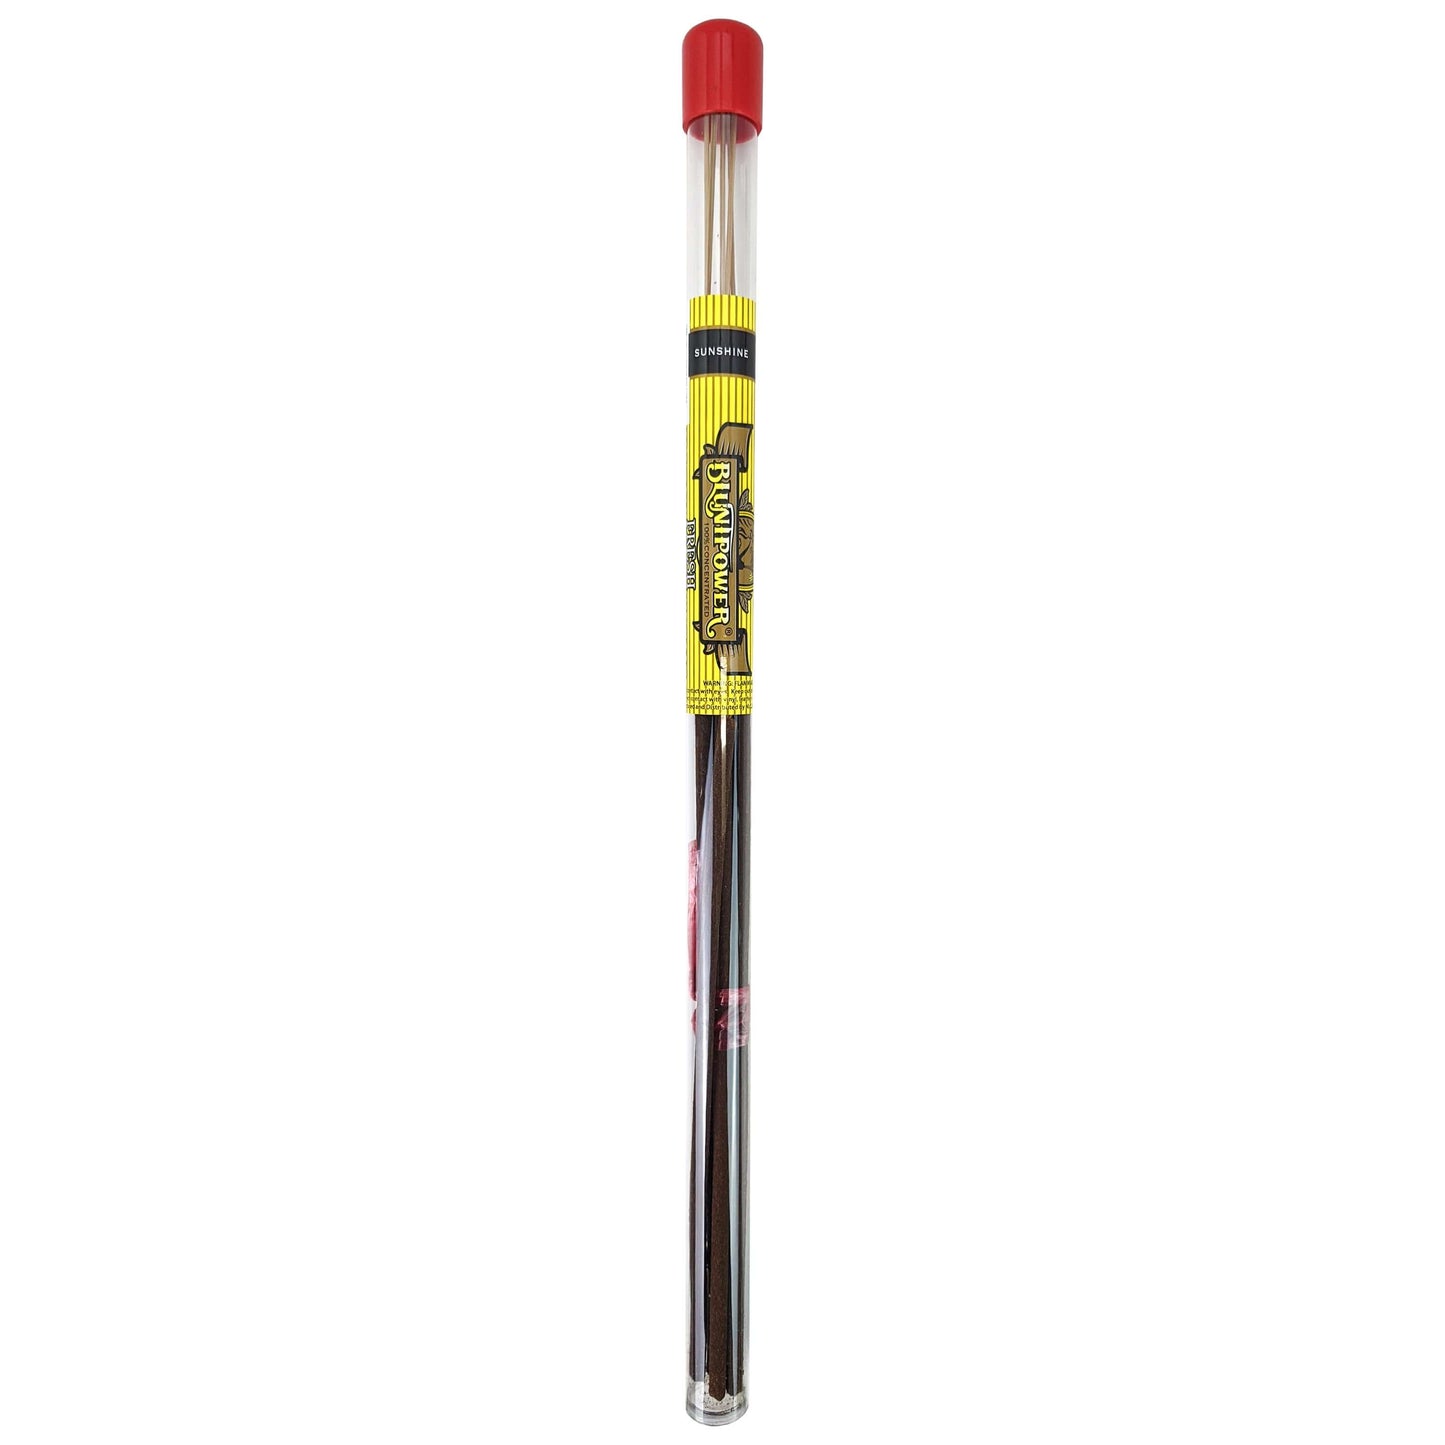 Sunshine Scent Blunt Power 17" Incense Sticks, 5-7 Sticks